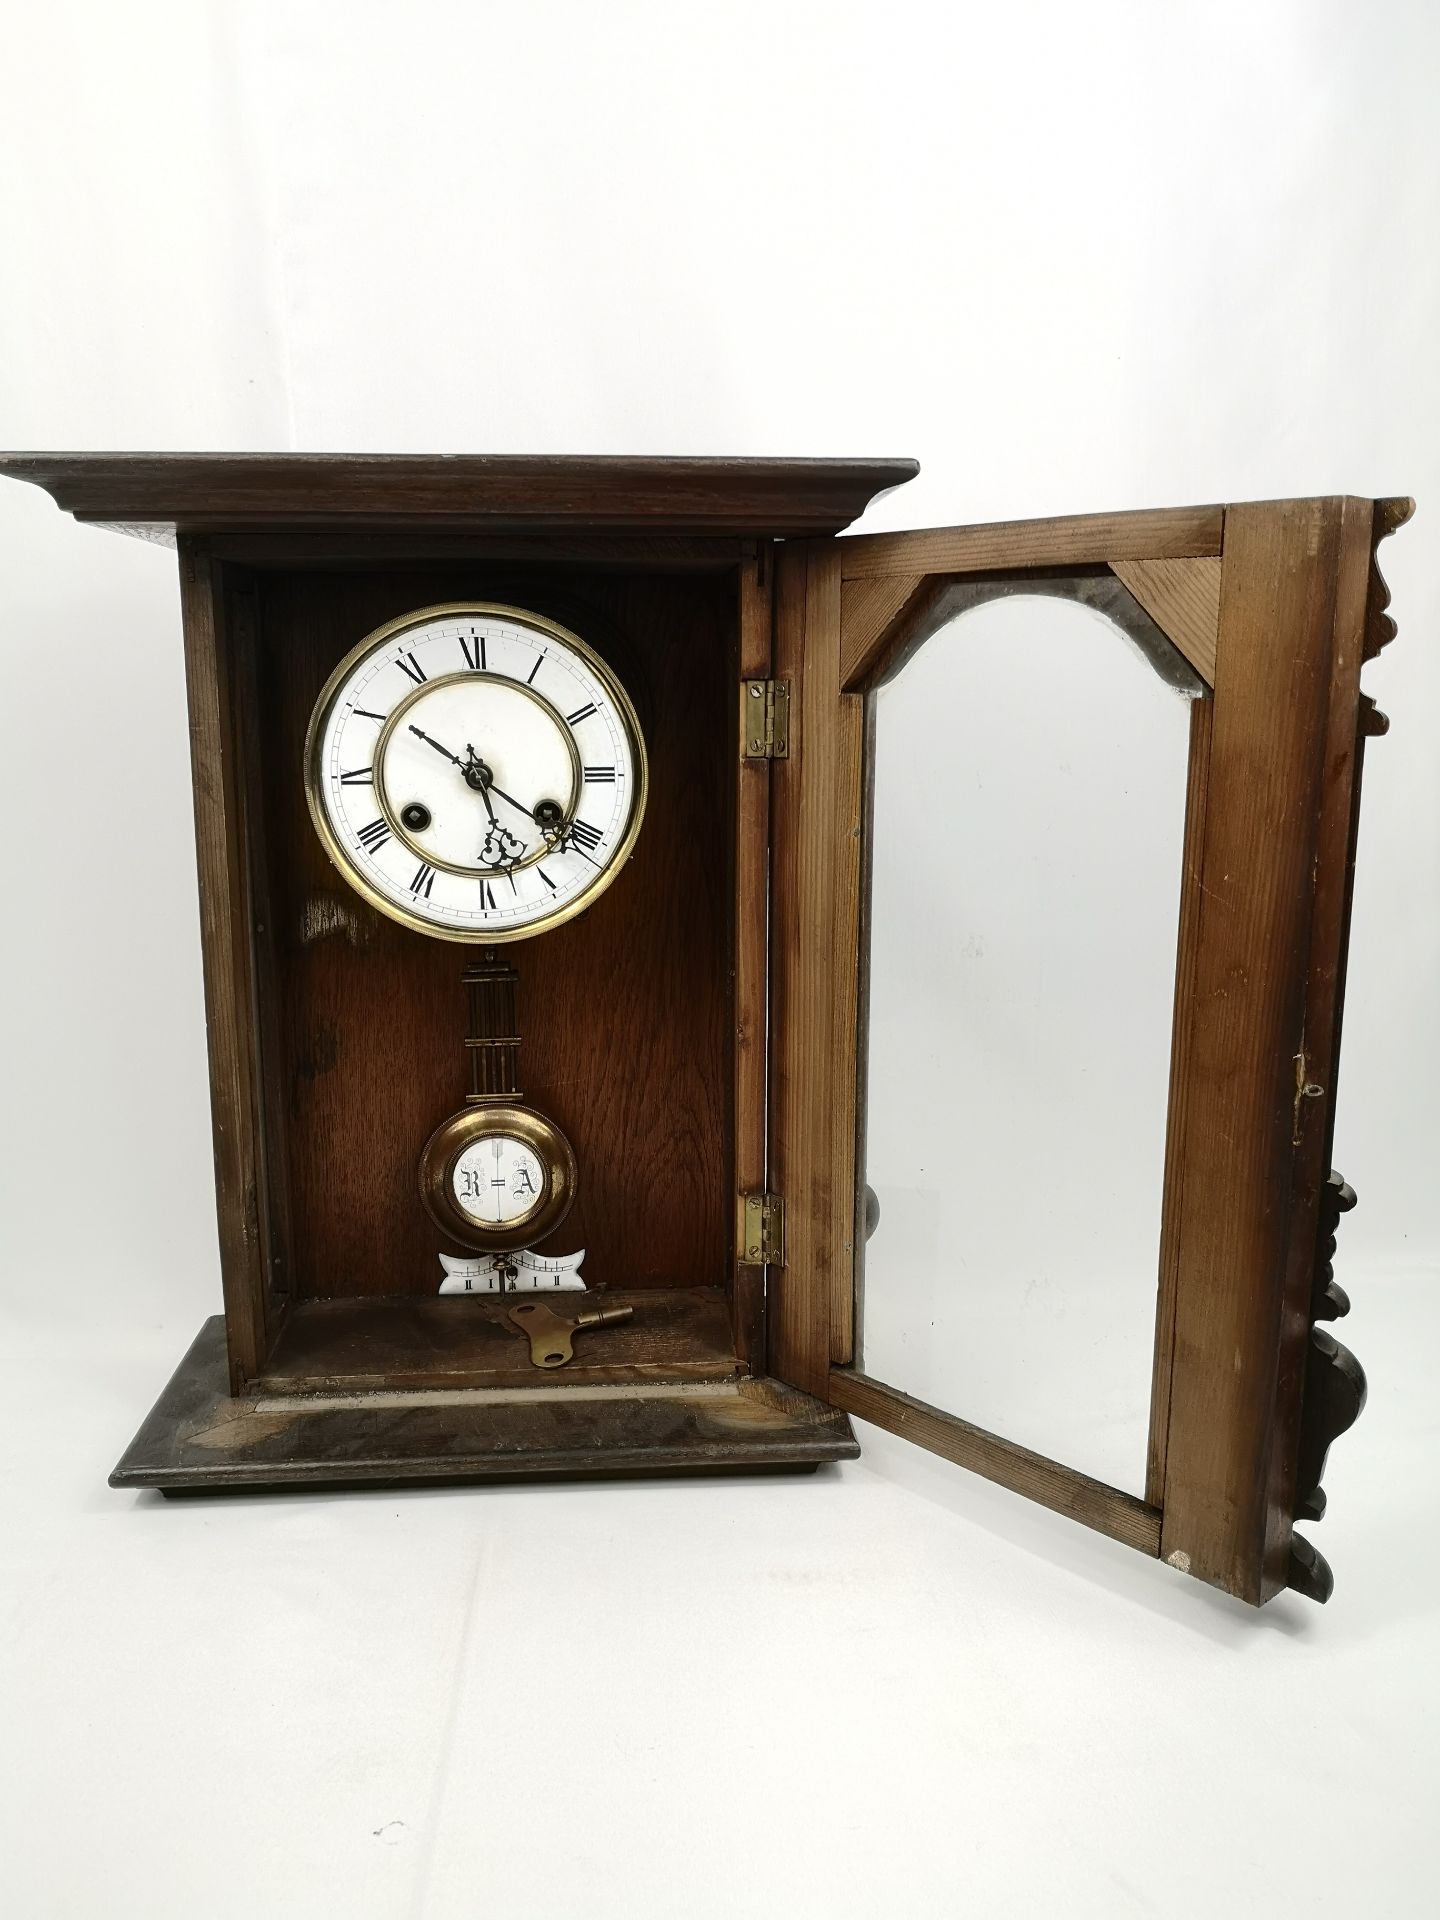 19th century oak cased wall clock - Image 3 of 6